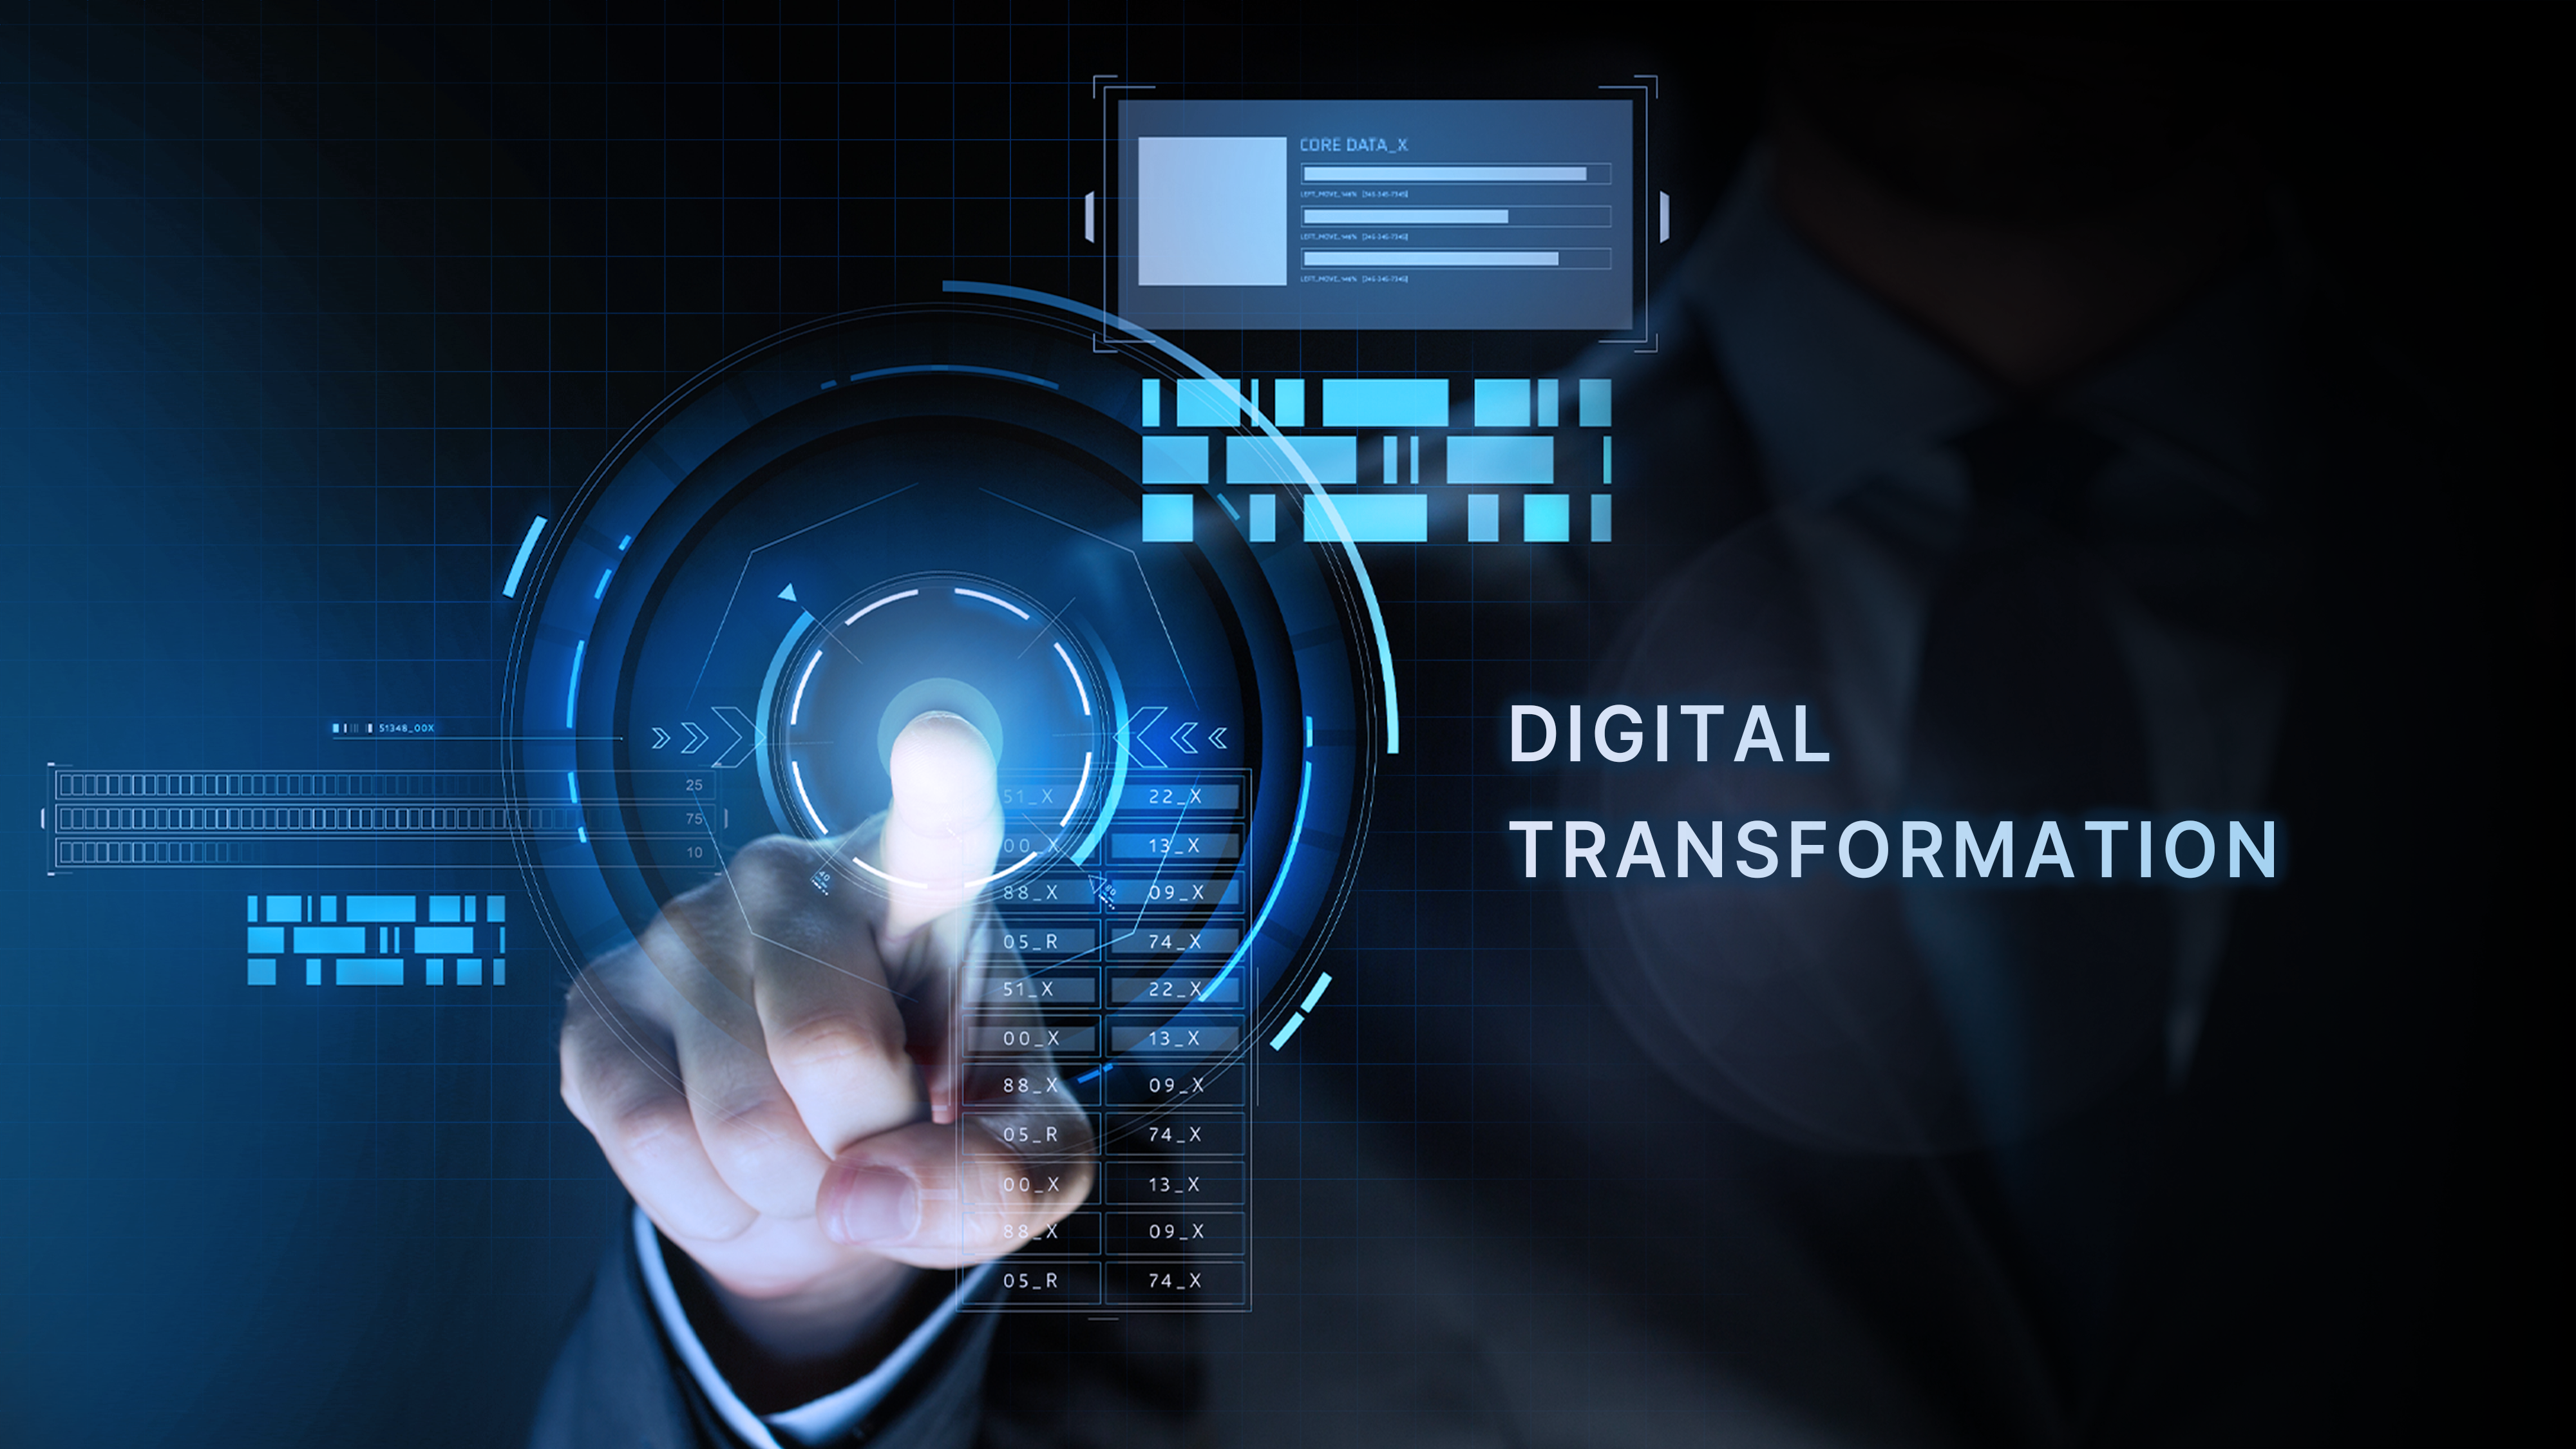 Digital transformation, DX, public sector digital transformation, cloud adoption, digital government